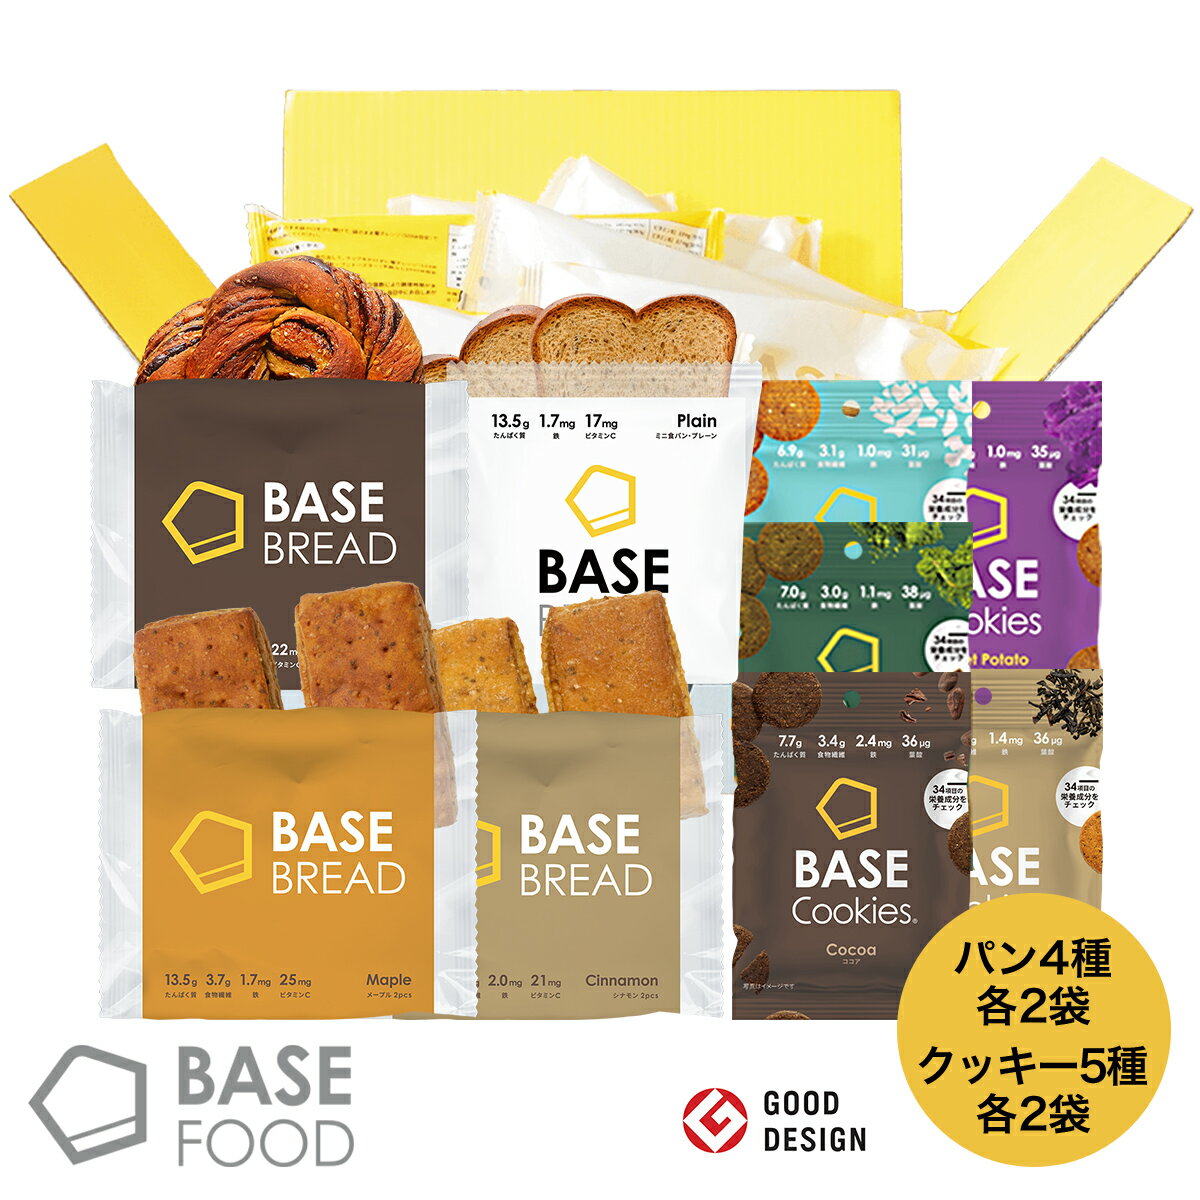 BASE BREAD& BASE Cookiesセット ミニ食パン チョコレート メープル シナモン 各2袋 クッキー ココア アールグレイ さつまいも ココナッツ 抹茶 完全栄養食 | basefood 栄養 置き換え ダイエッ…